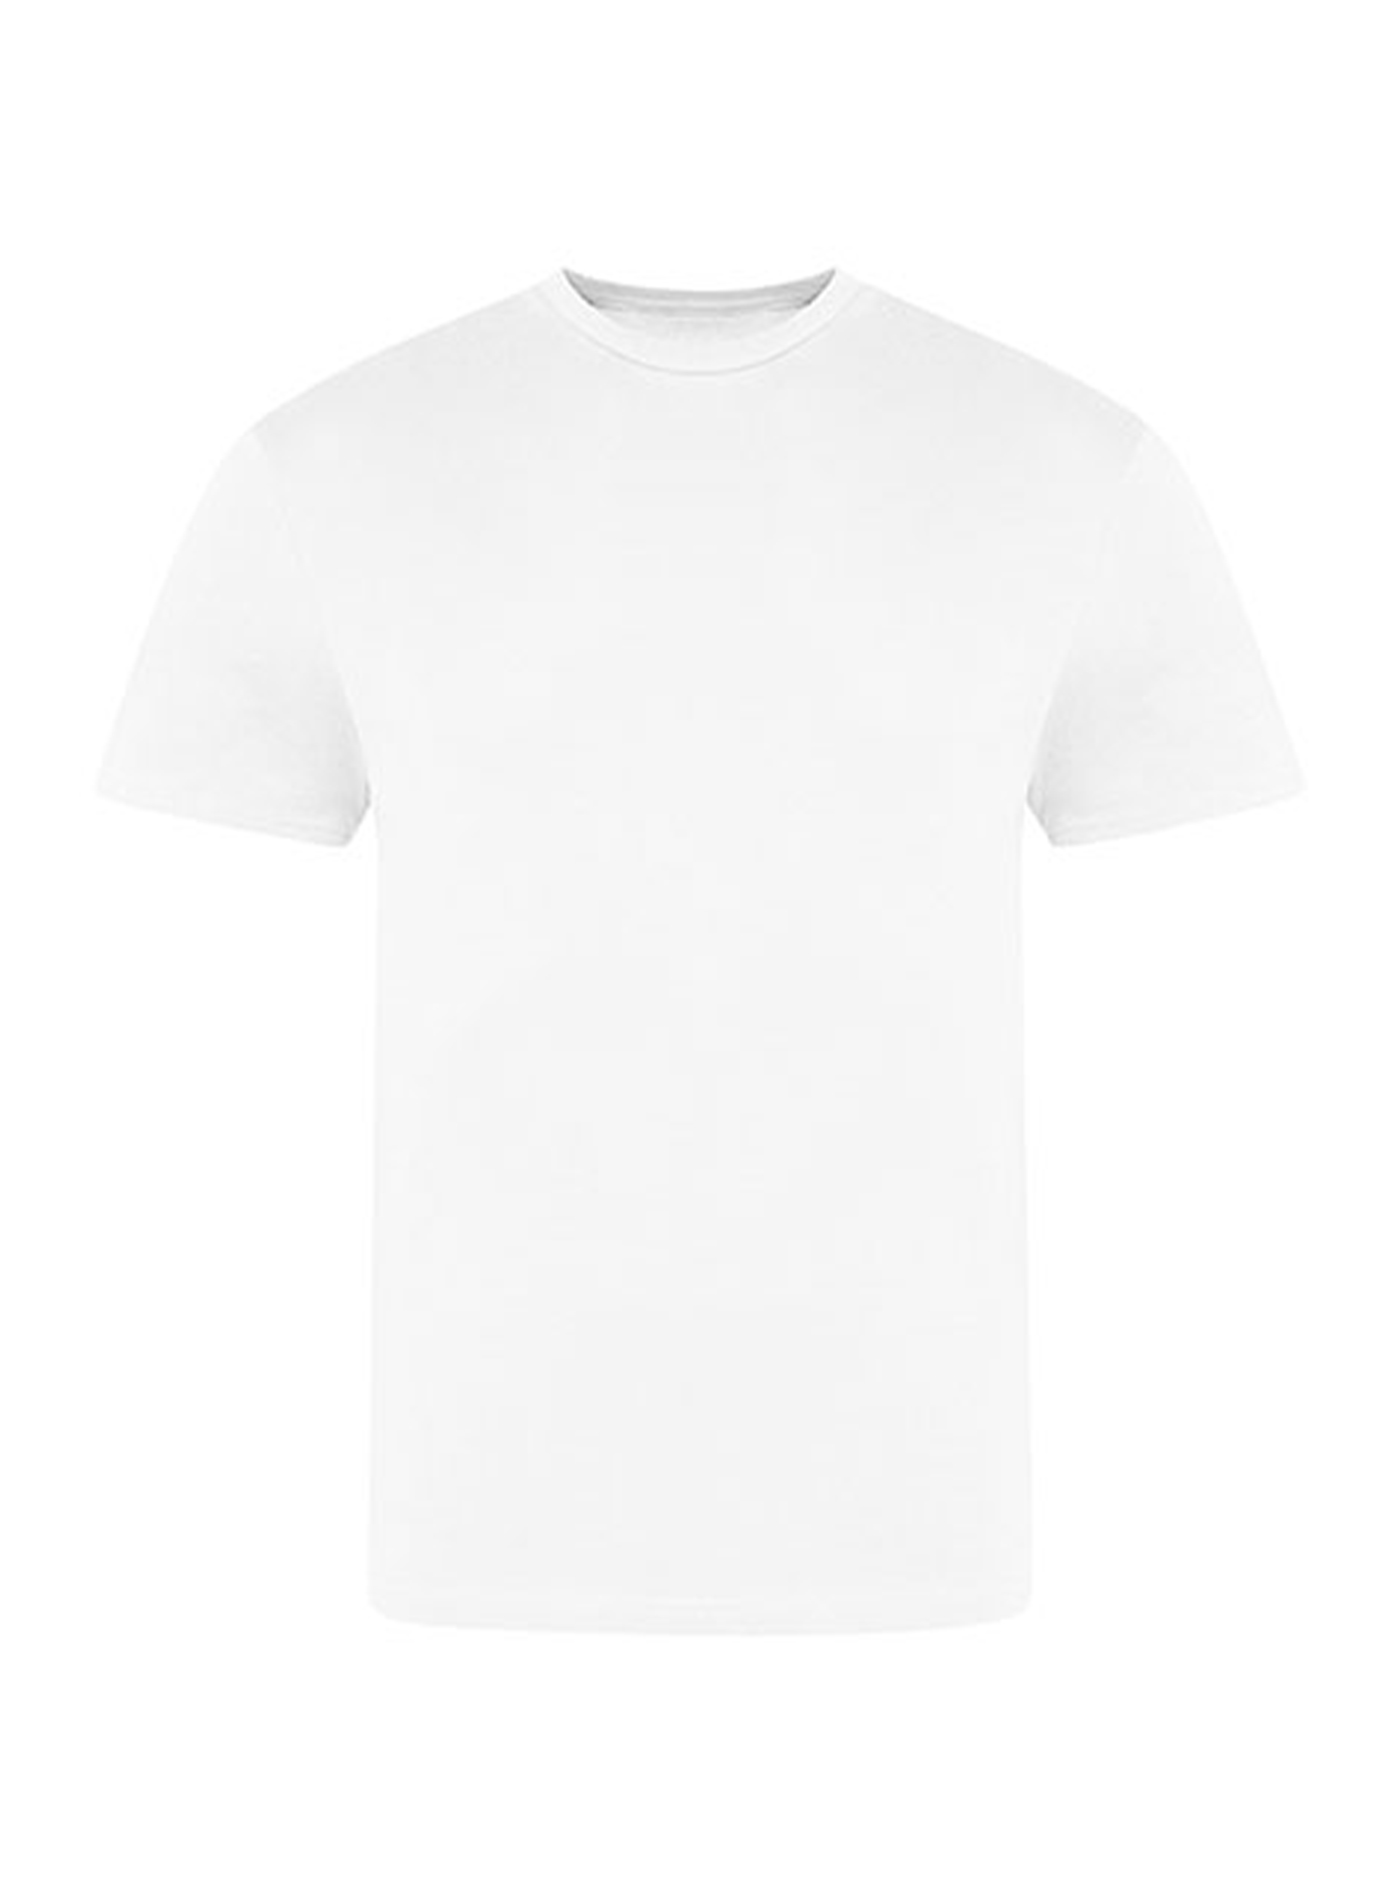 Pánské tričko Just Ts - Bílá L